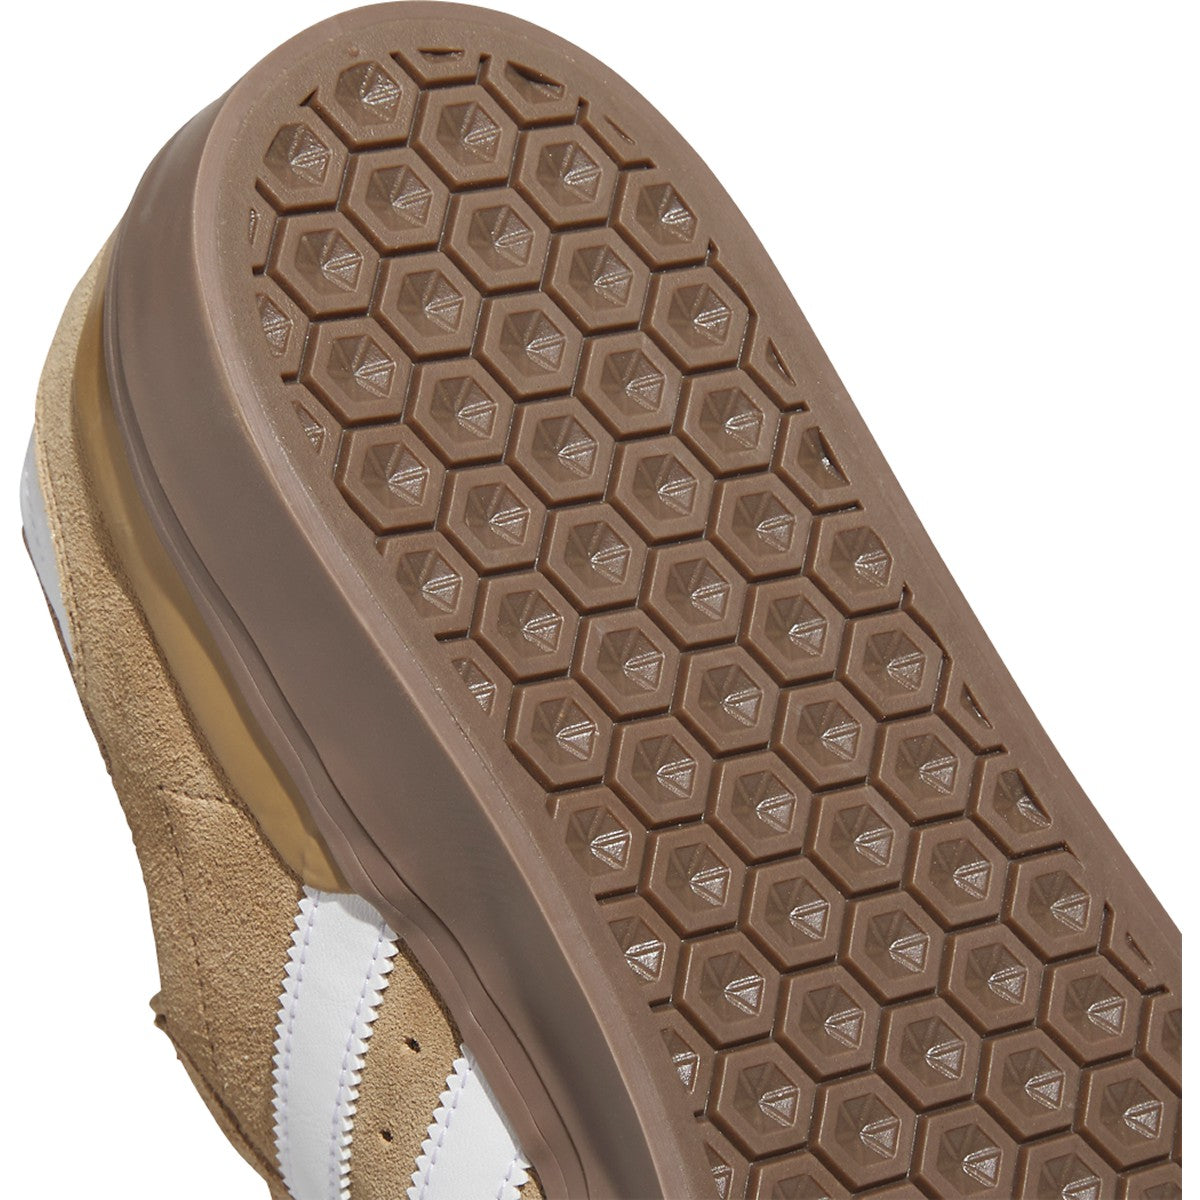 Cardboard Busenitz Vulc II Adidas Skate Shoe Detail